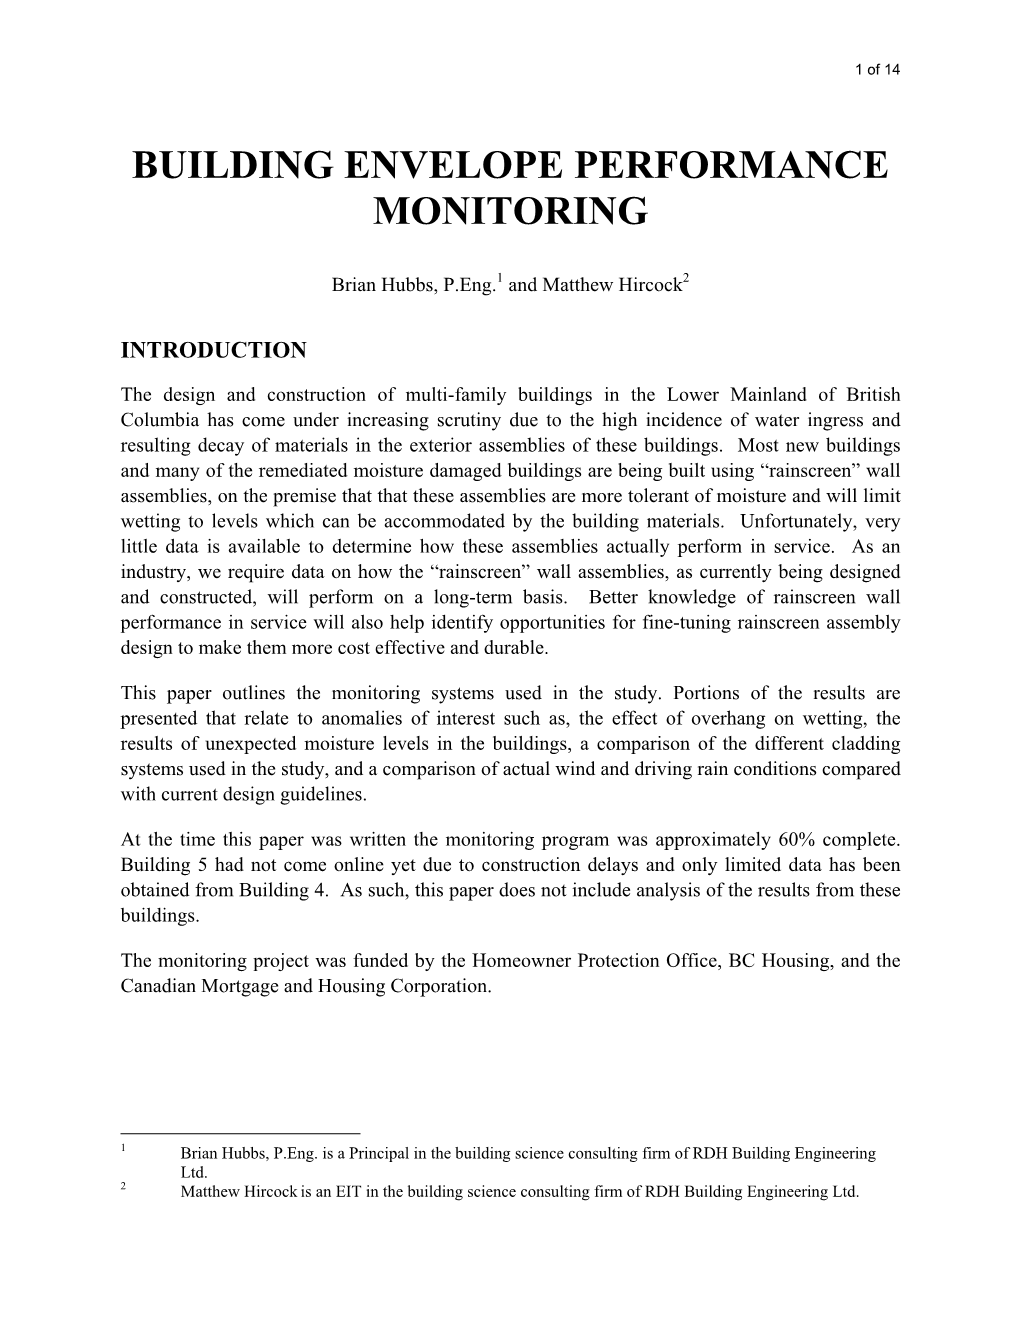 Building Envelope Performance Monitoring